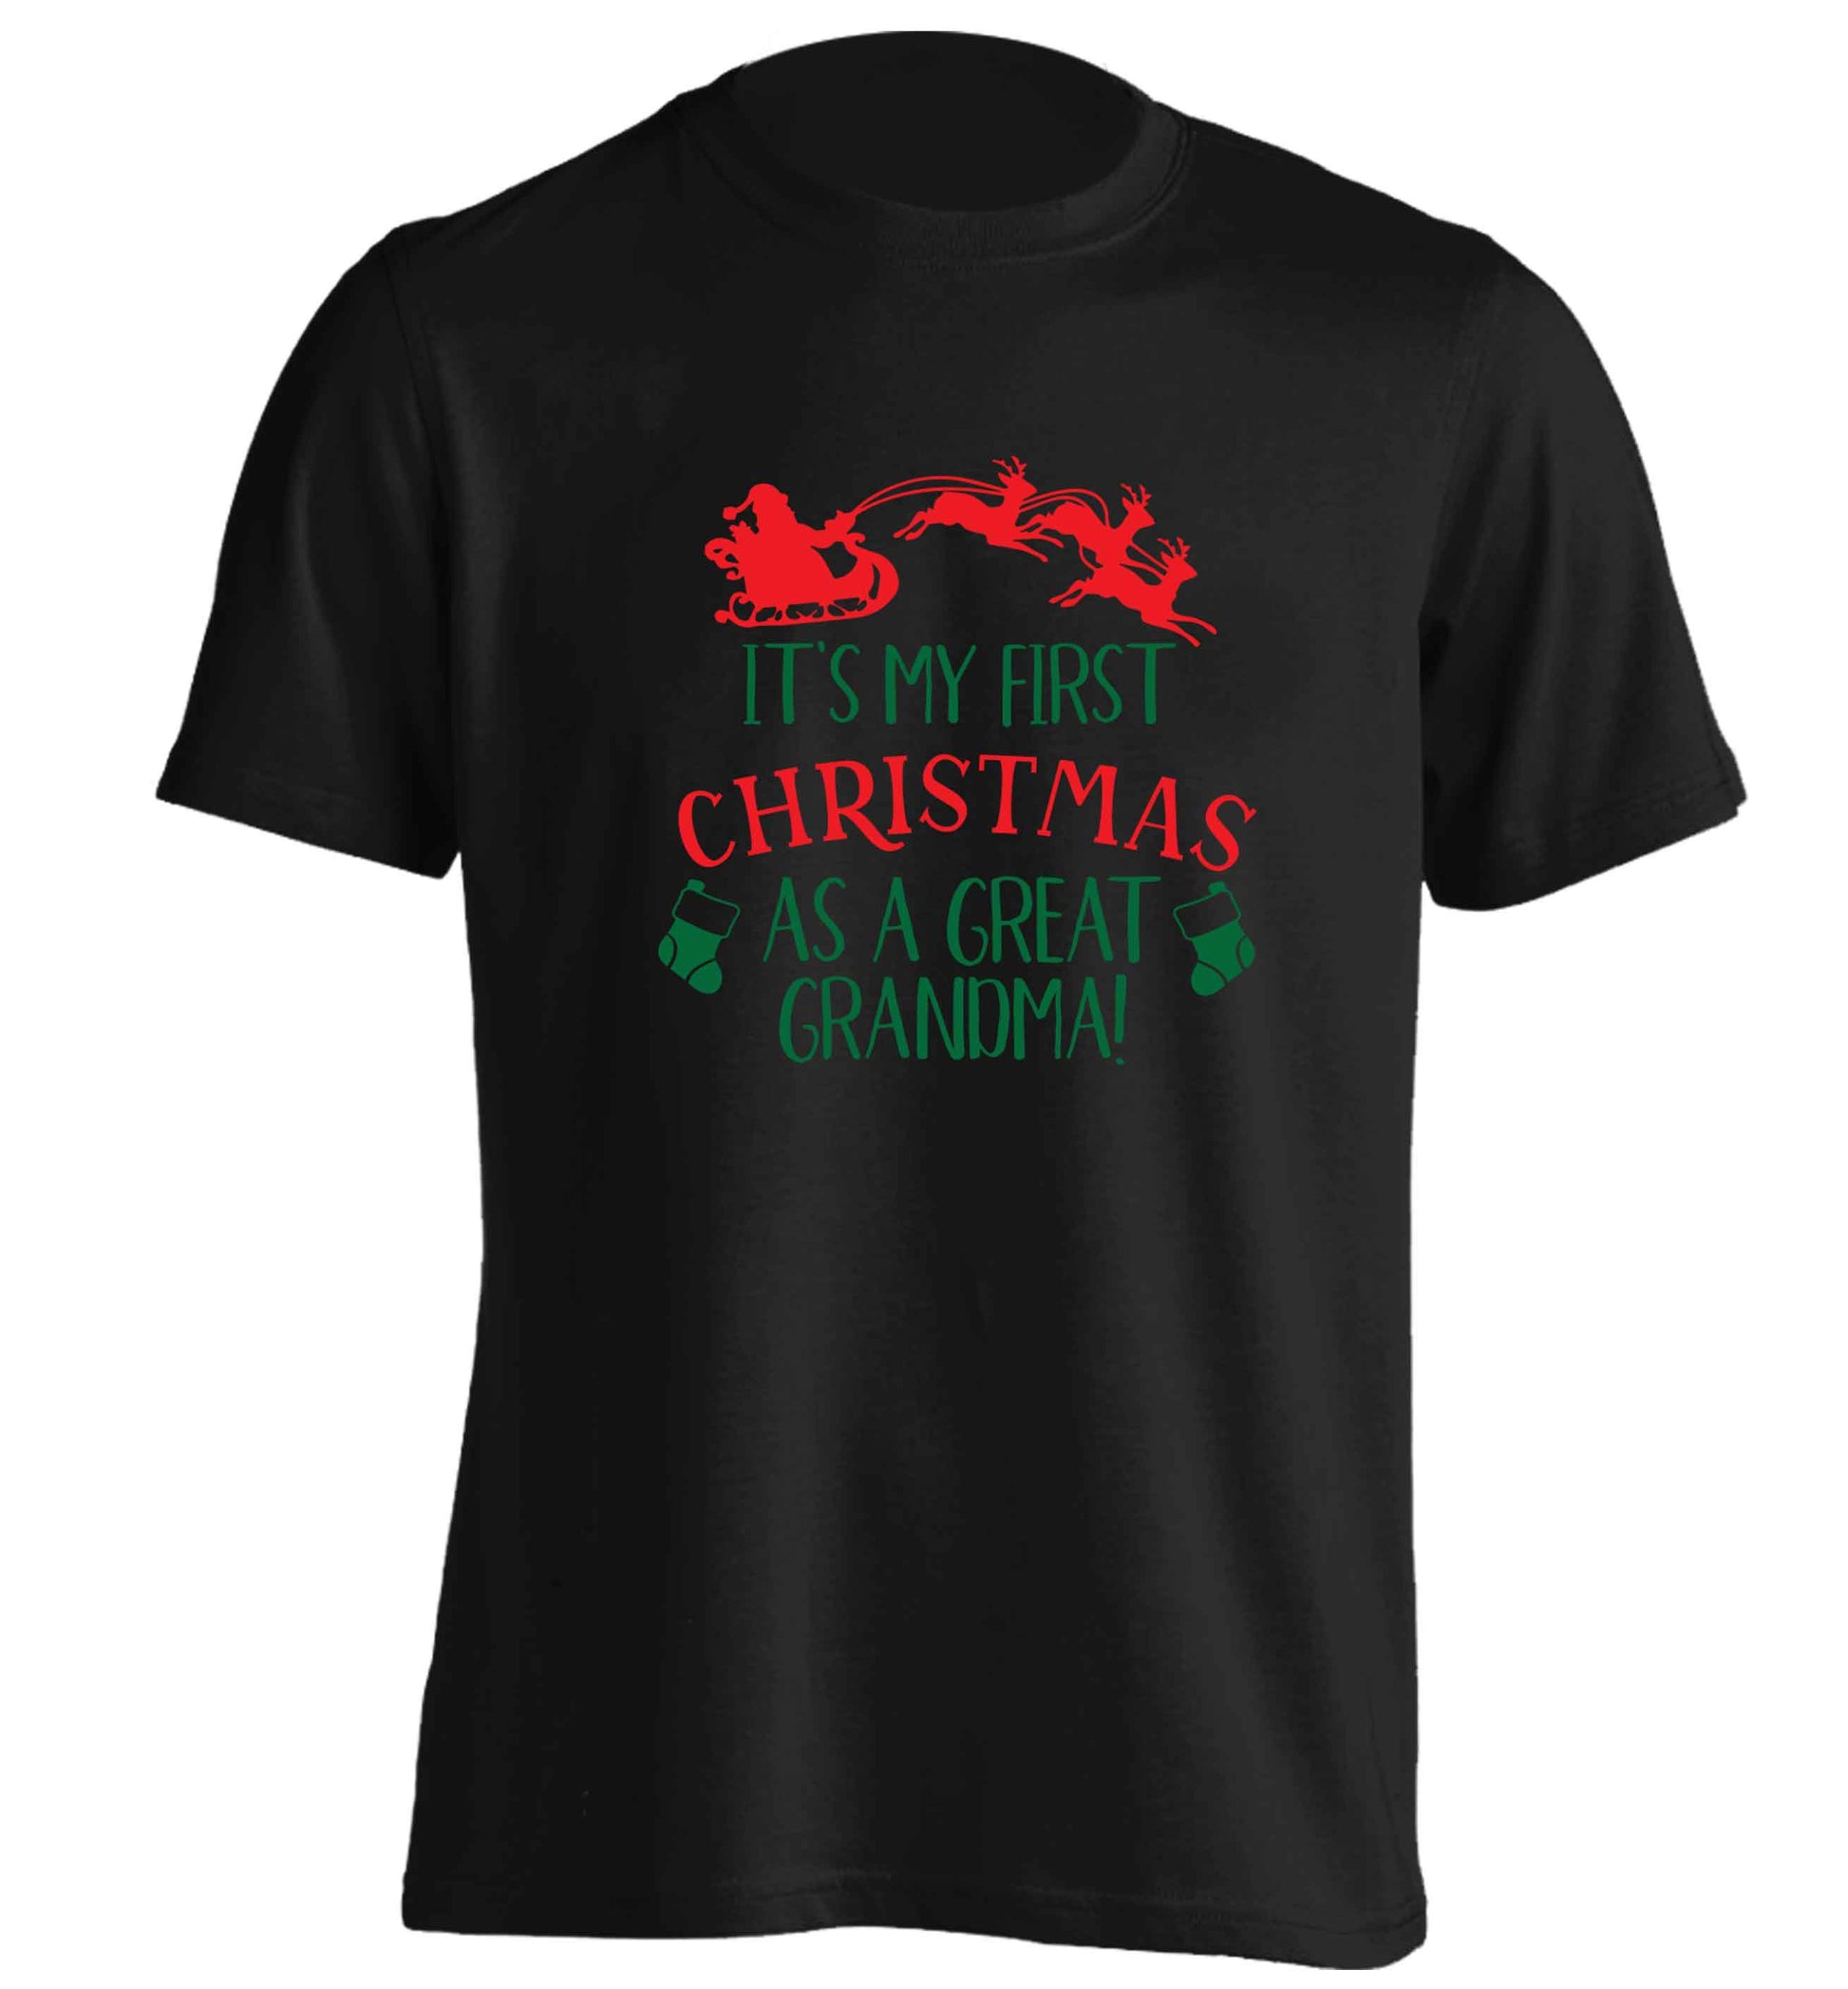 It's my first Christmas as a great grandma! adults unisex black Tshirt 2XL